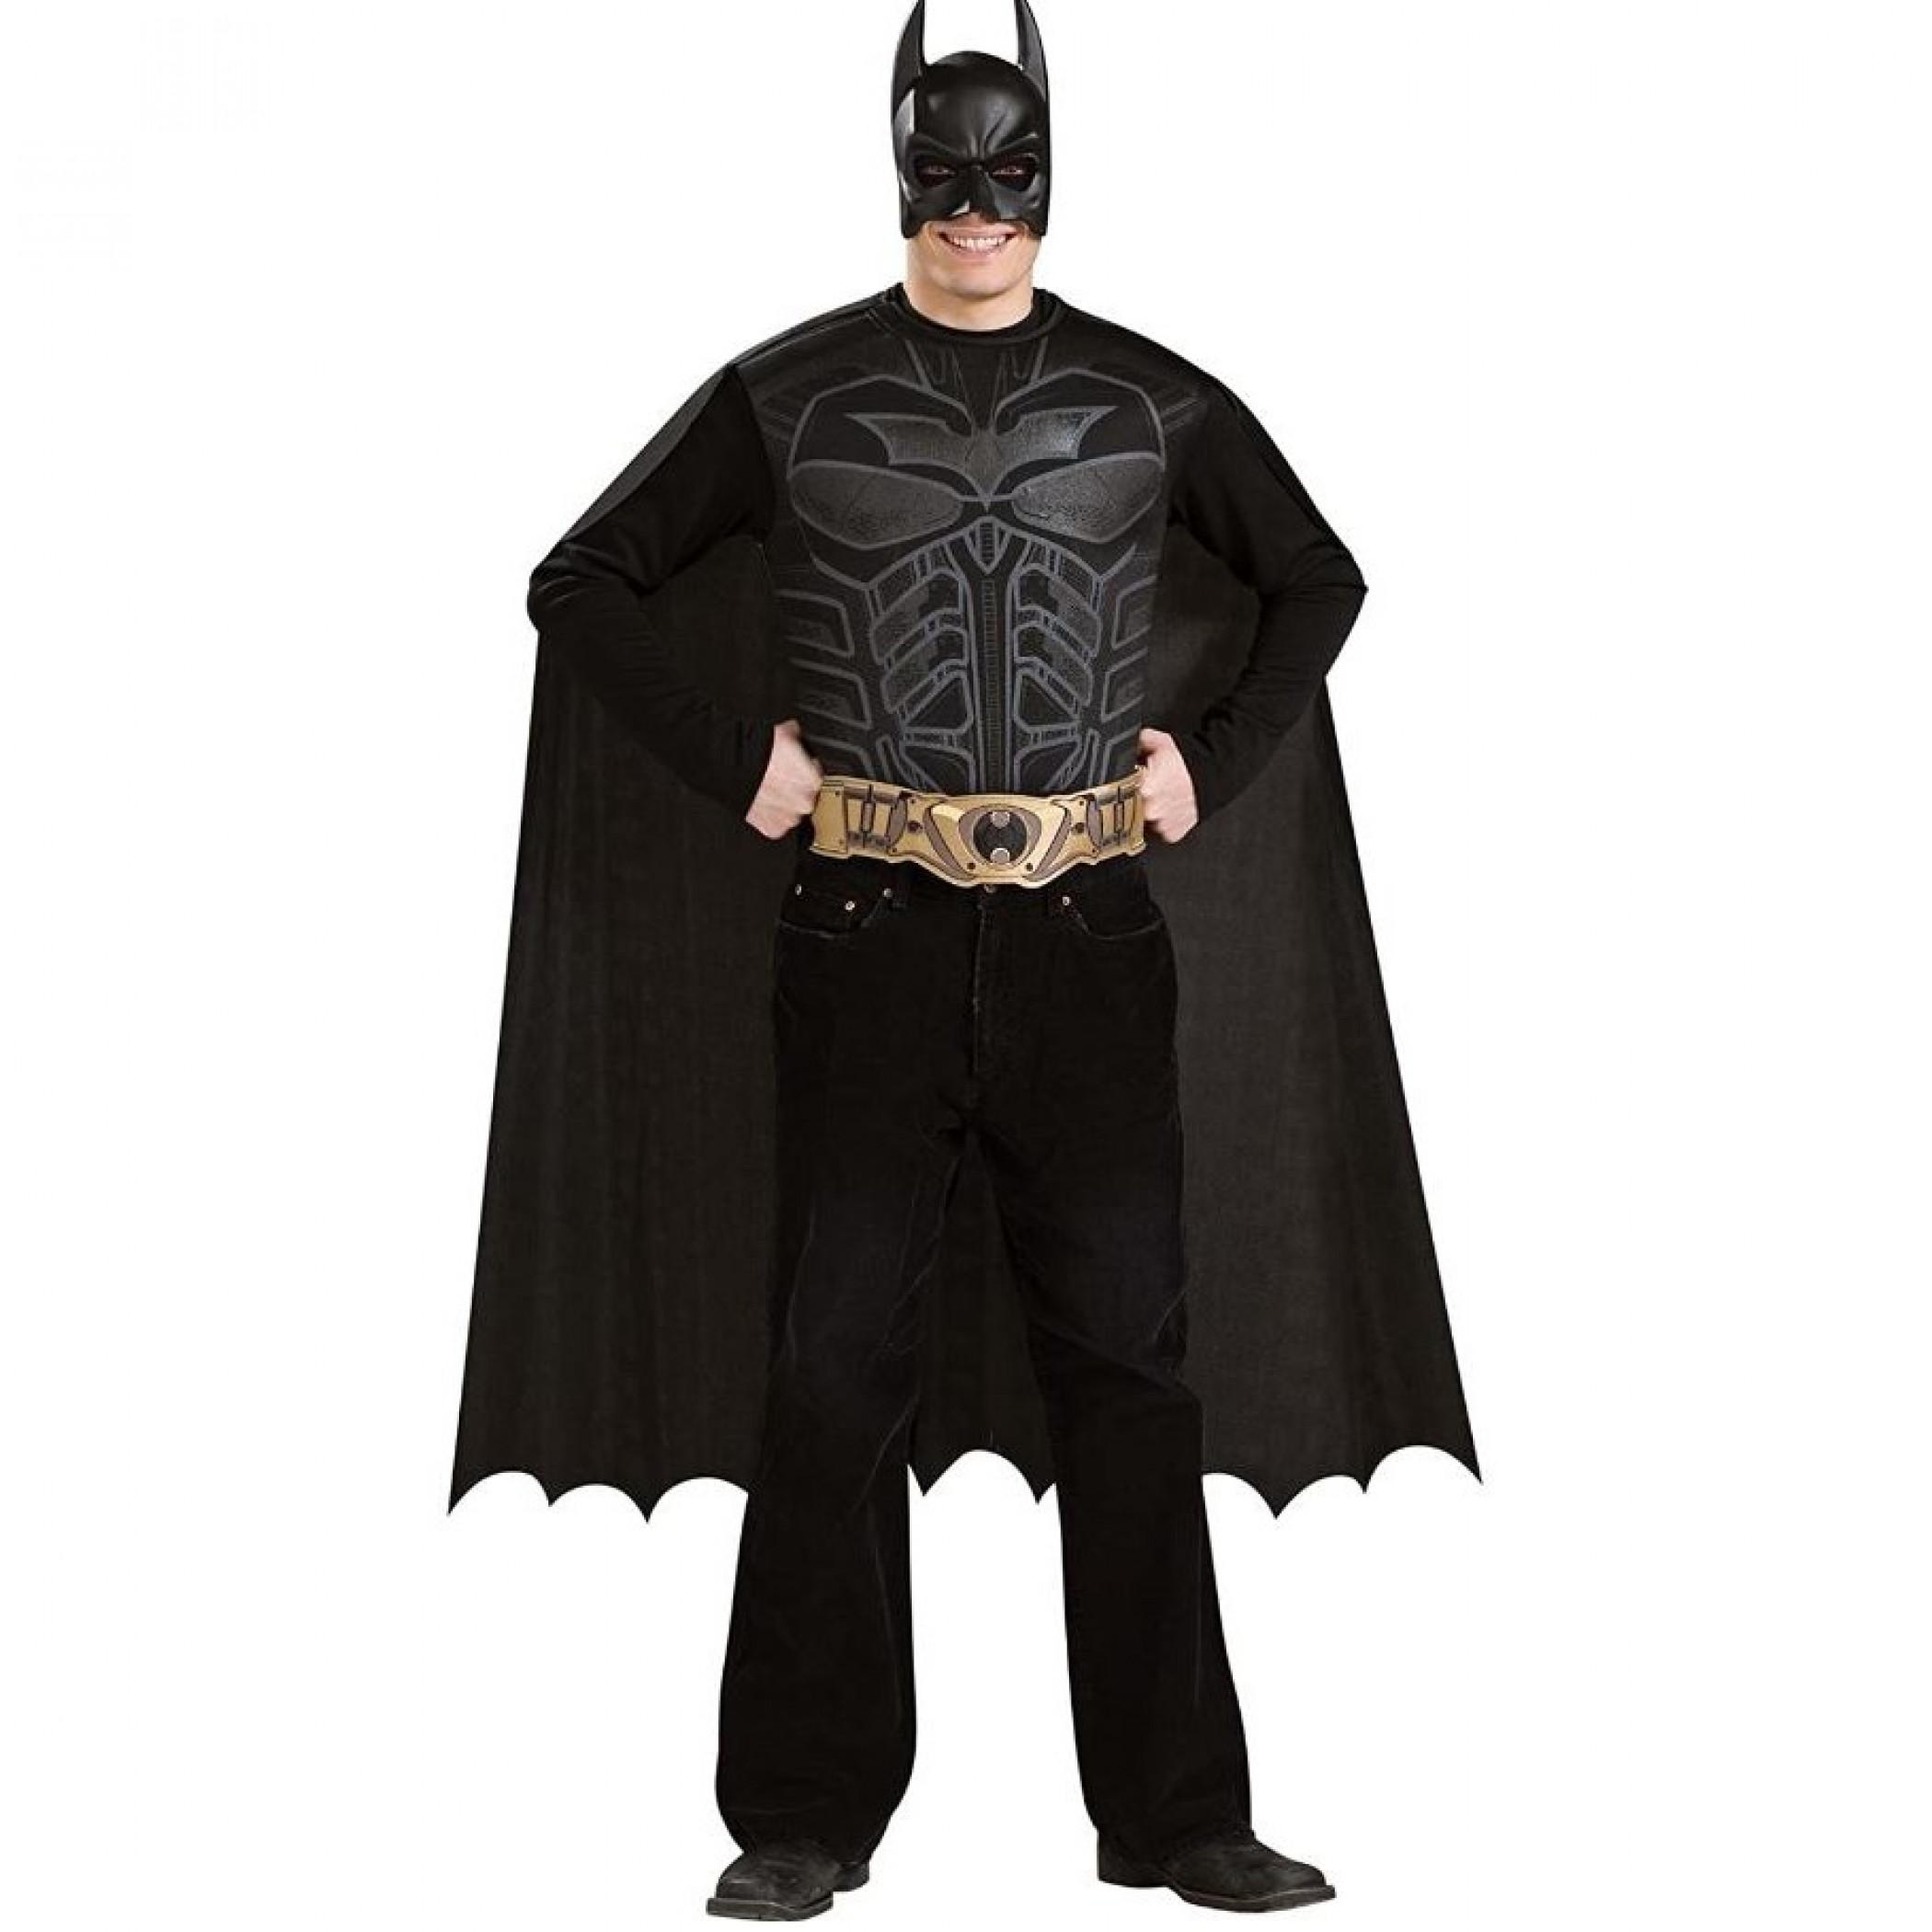 Batman Dark Knight Rises Adult Costume 4-Piece Set